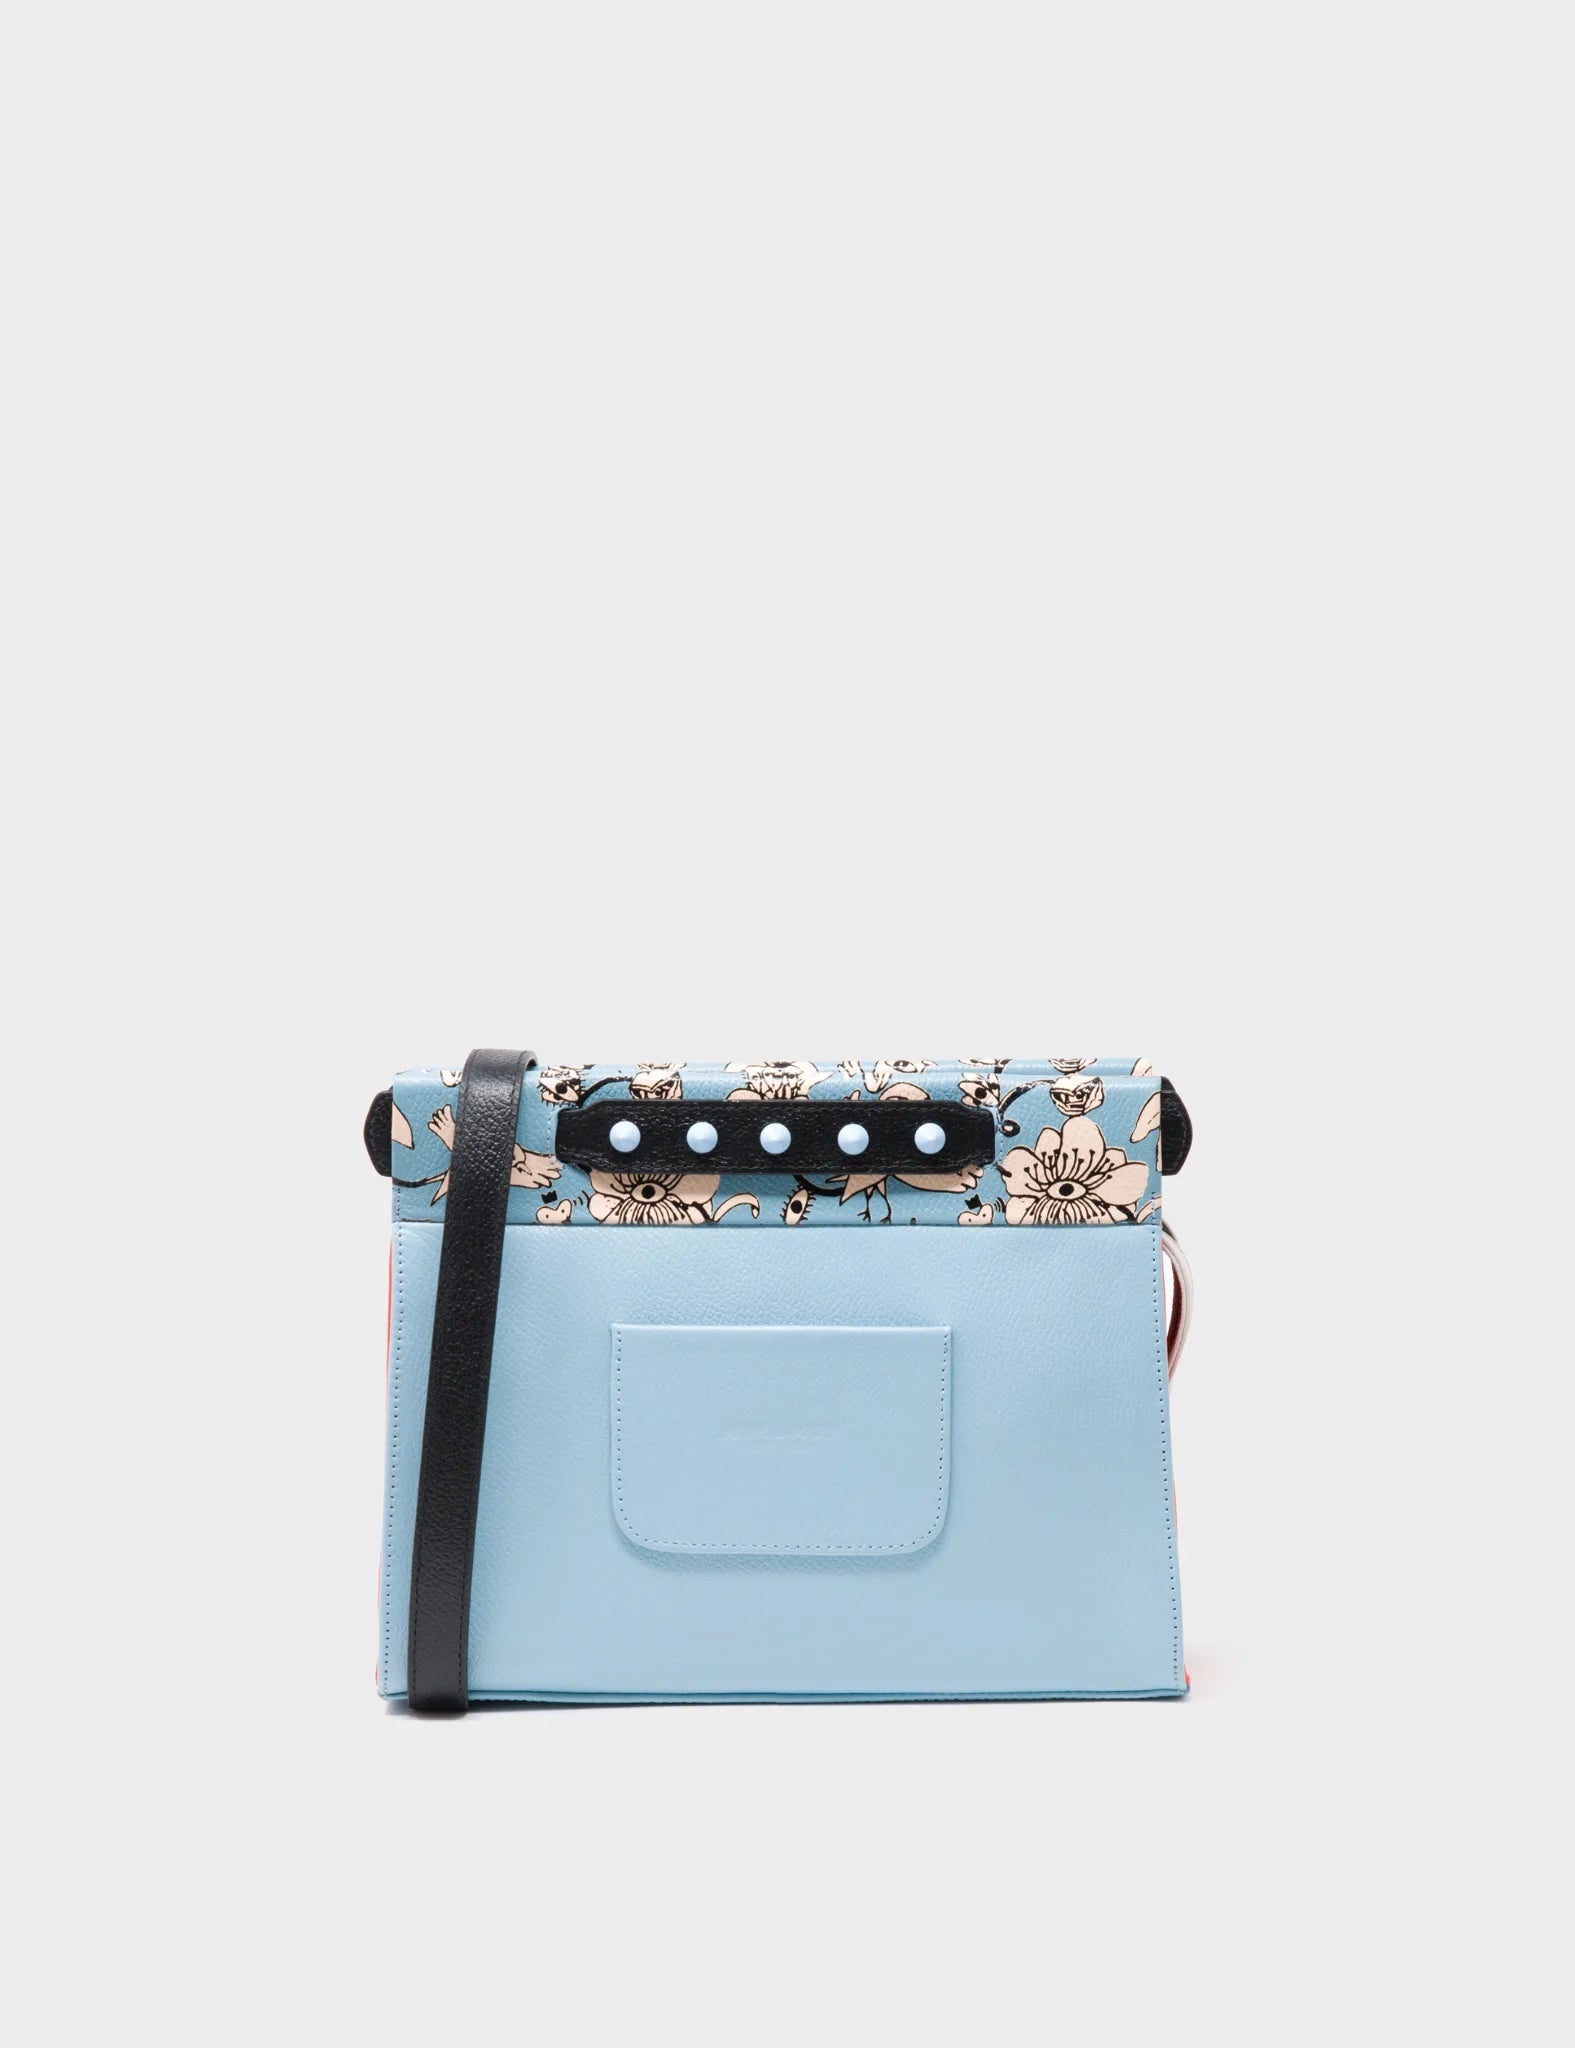 Vali Crossbody Stratosphere Blue Leather Handbag - Tangle Rumble Print